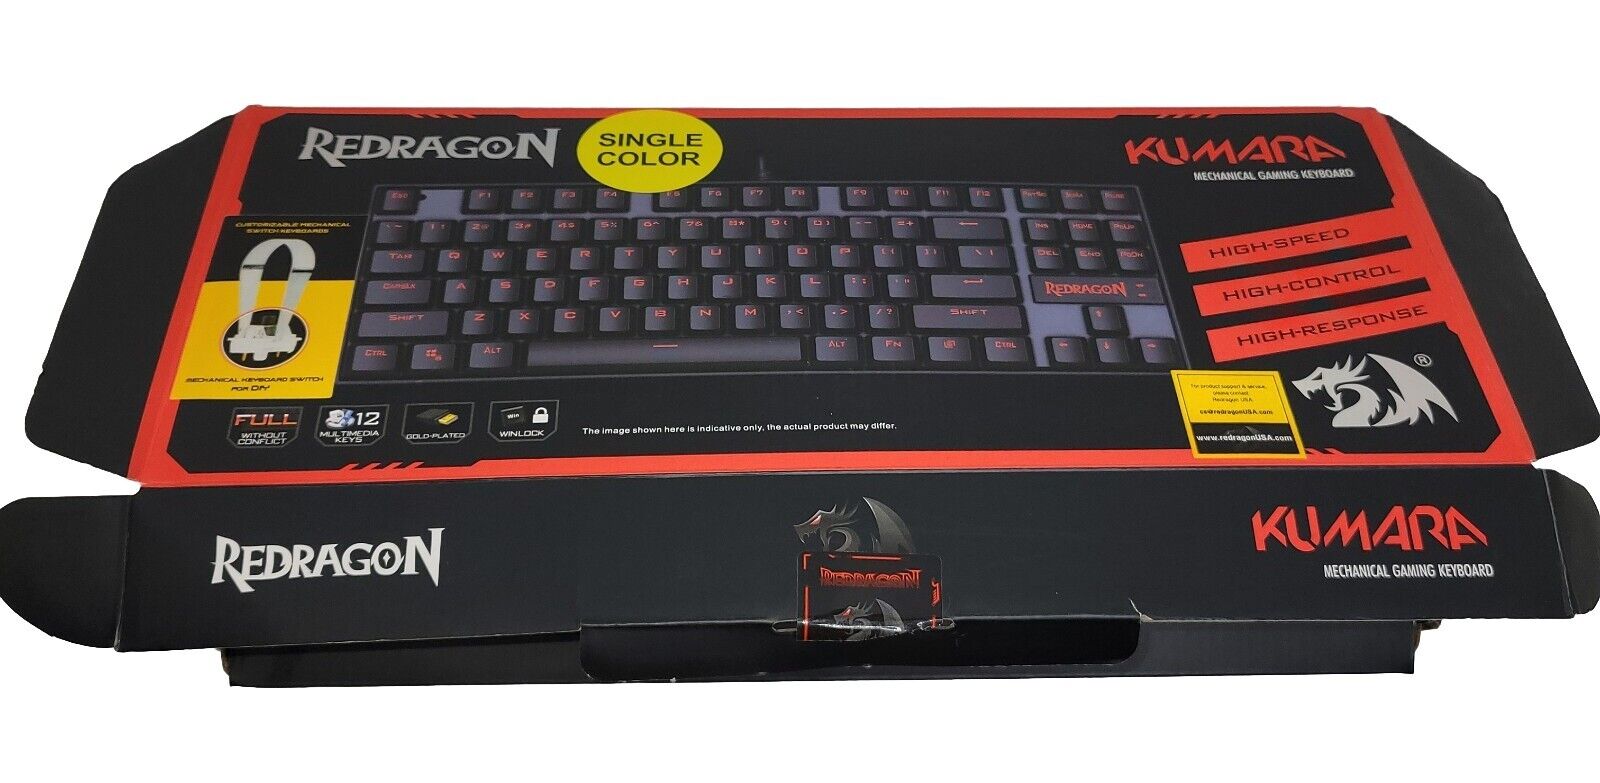 Redragon Kumara Keyboard Gaming Mechanical K552-1 Key LED RGB Tested & Working